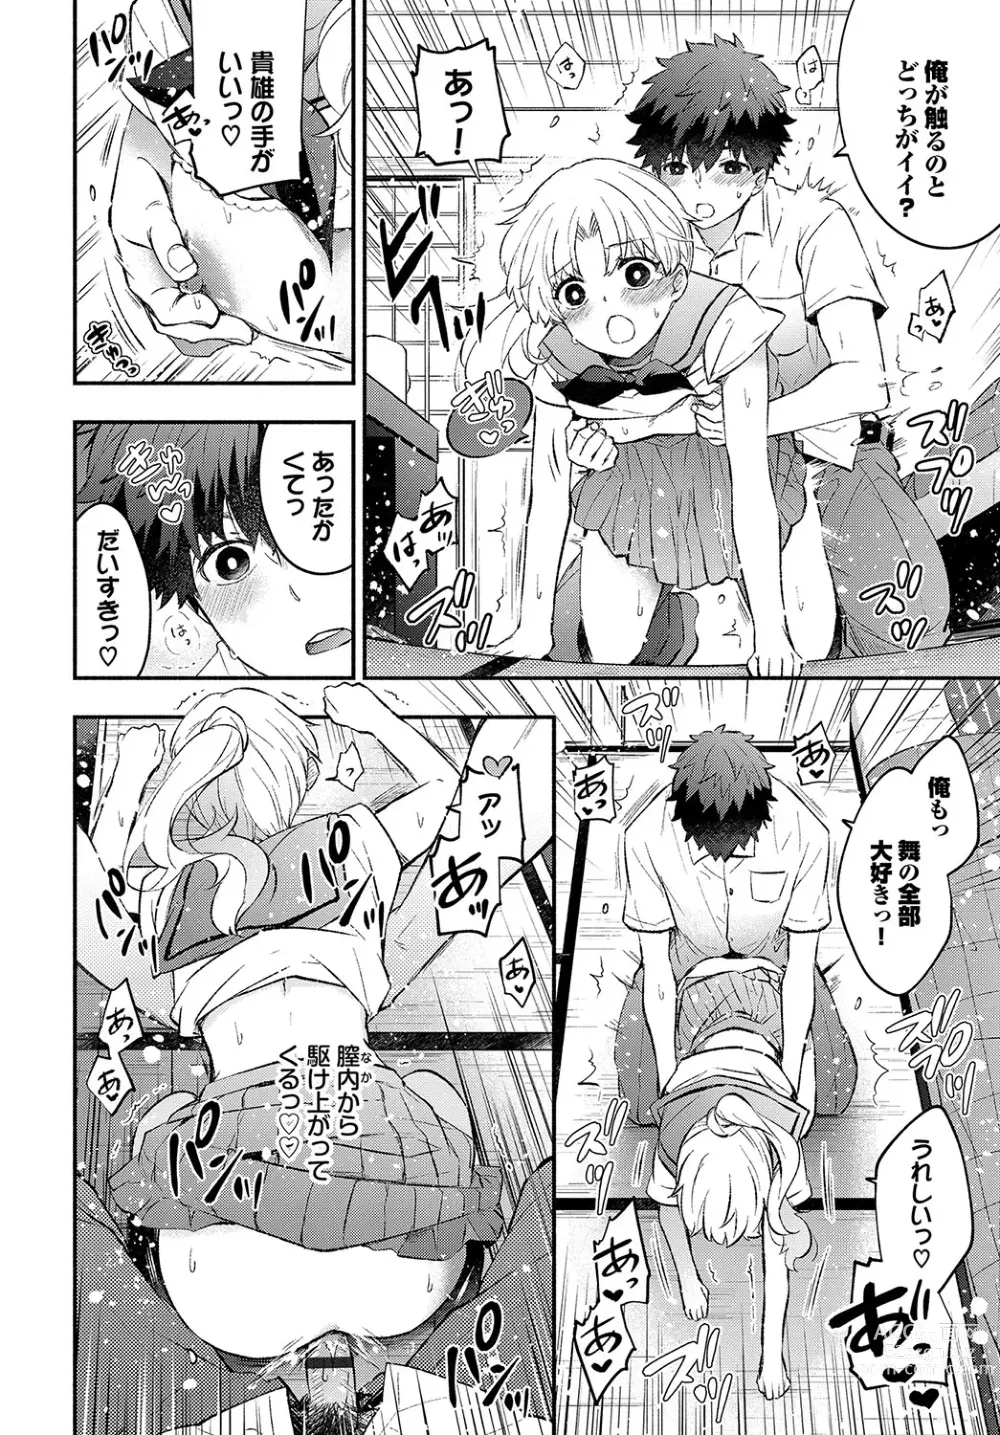 Page 201 of manga Junai Porno - Pure Love Porno